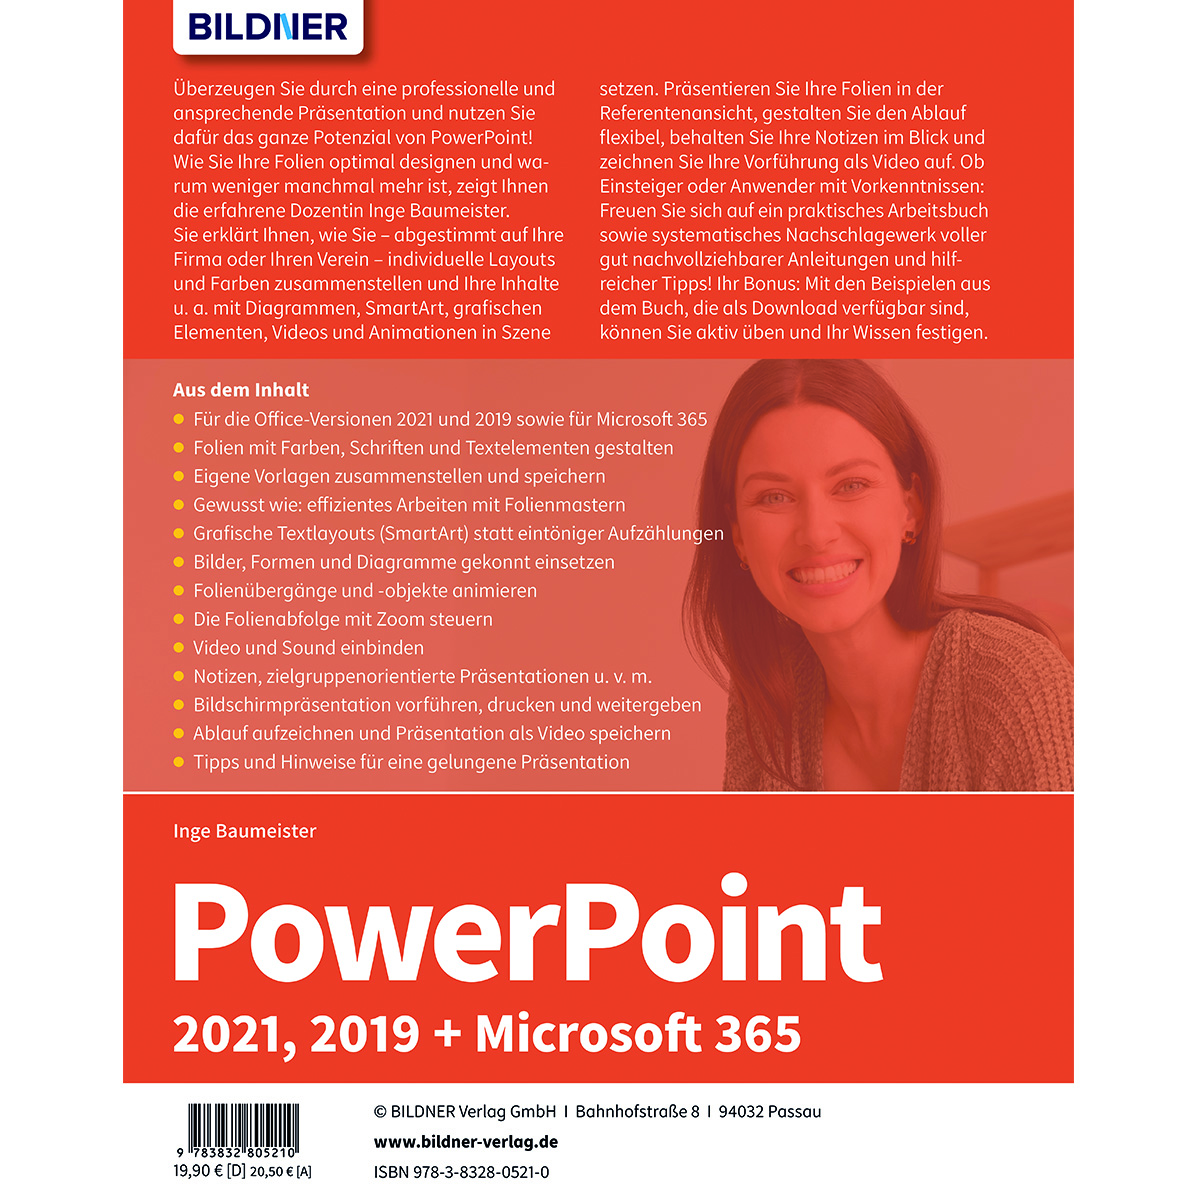 2021, Microsoft + 2019 PowerPoint 365